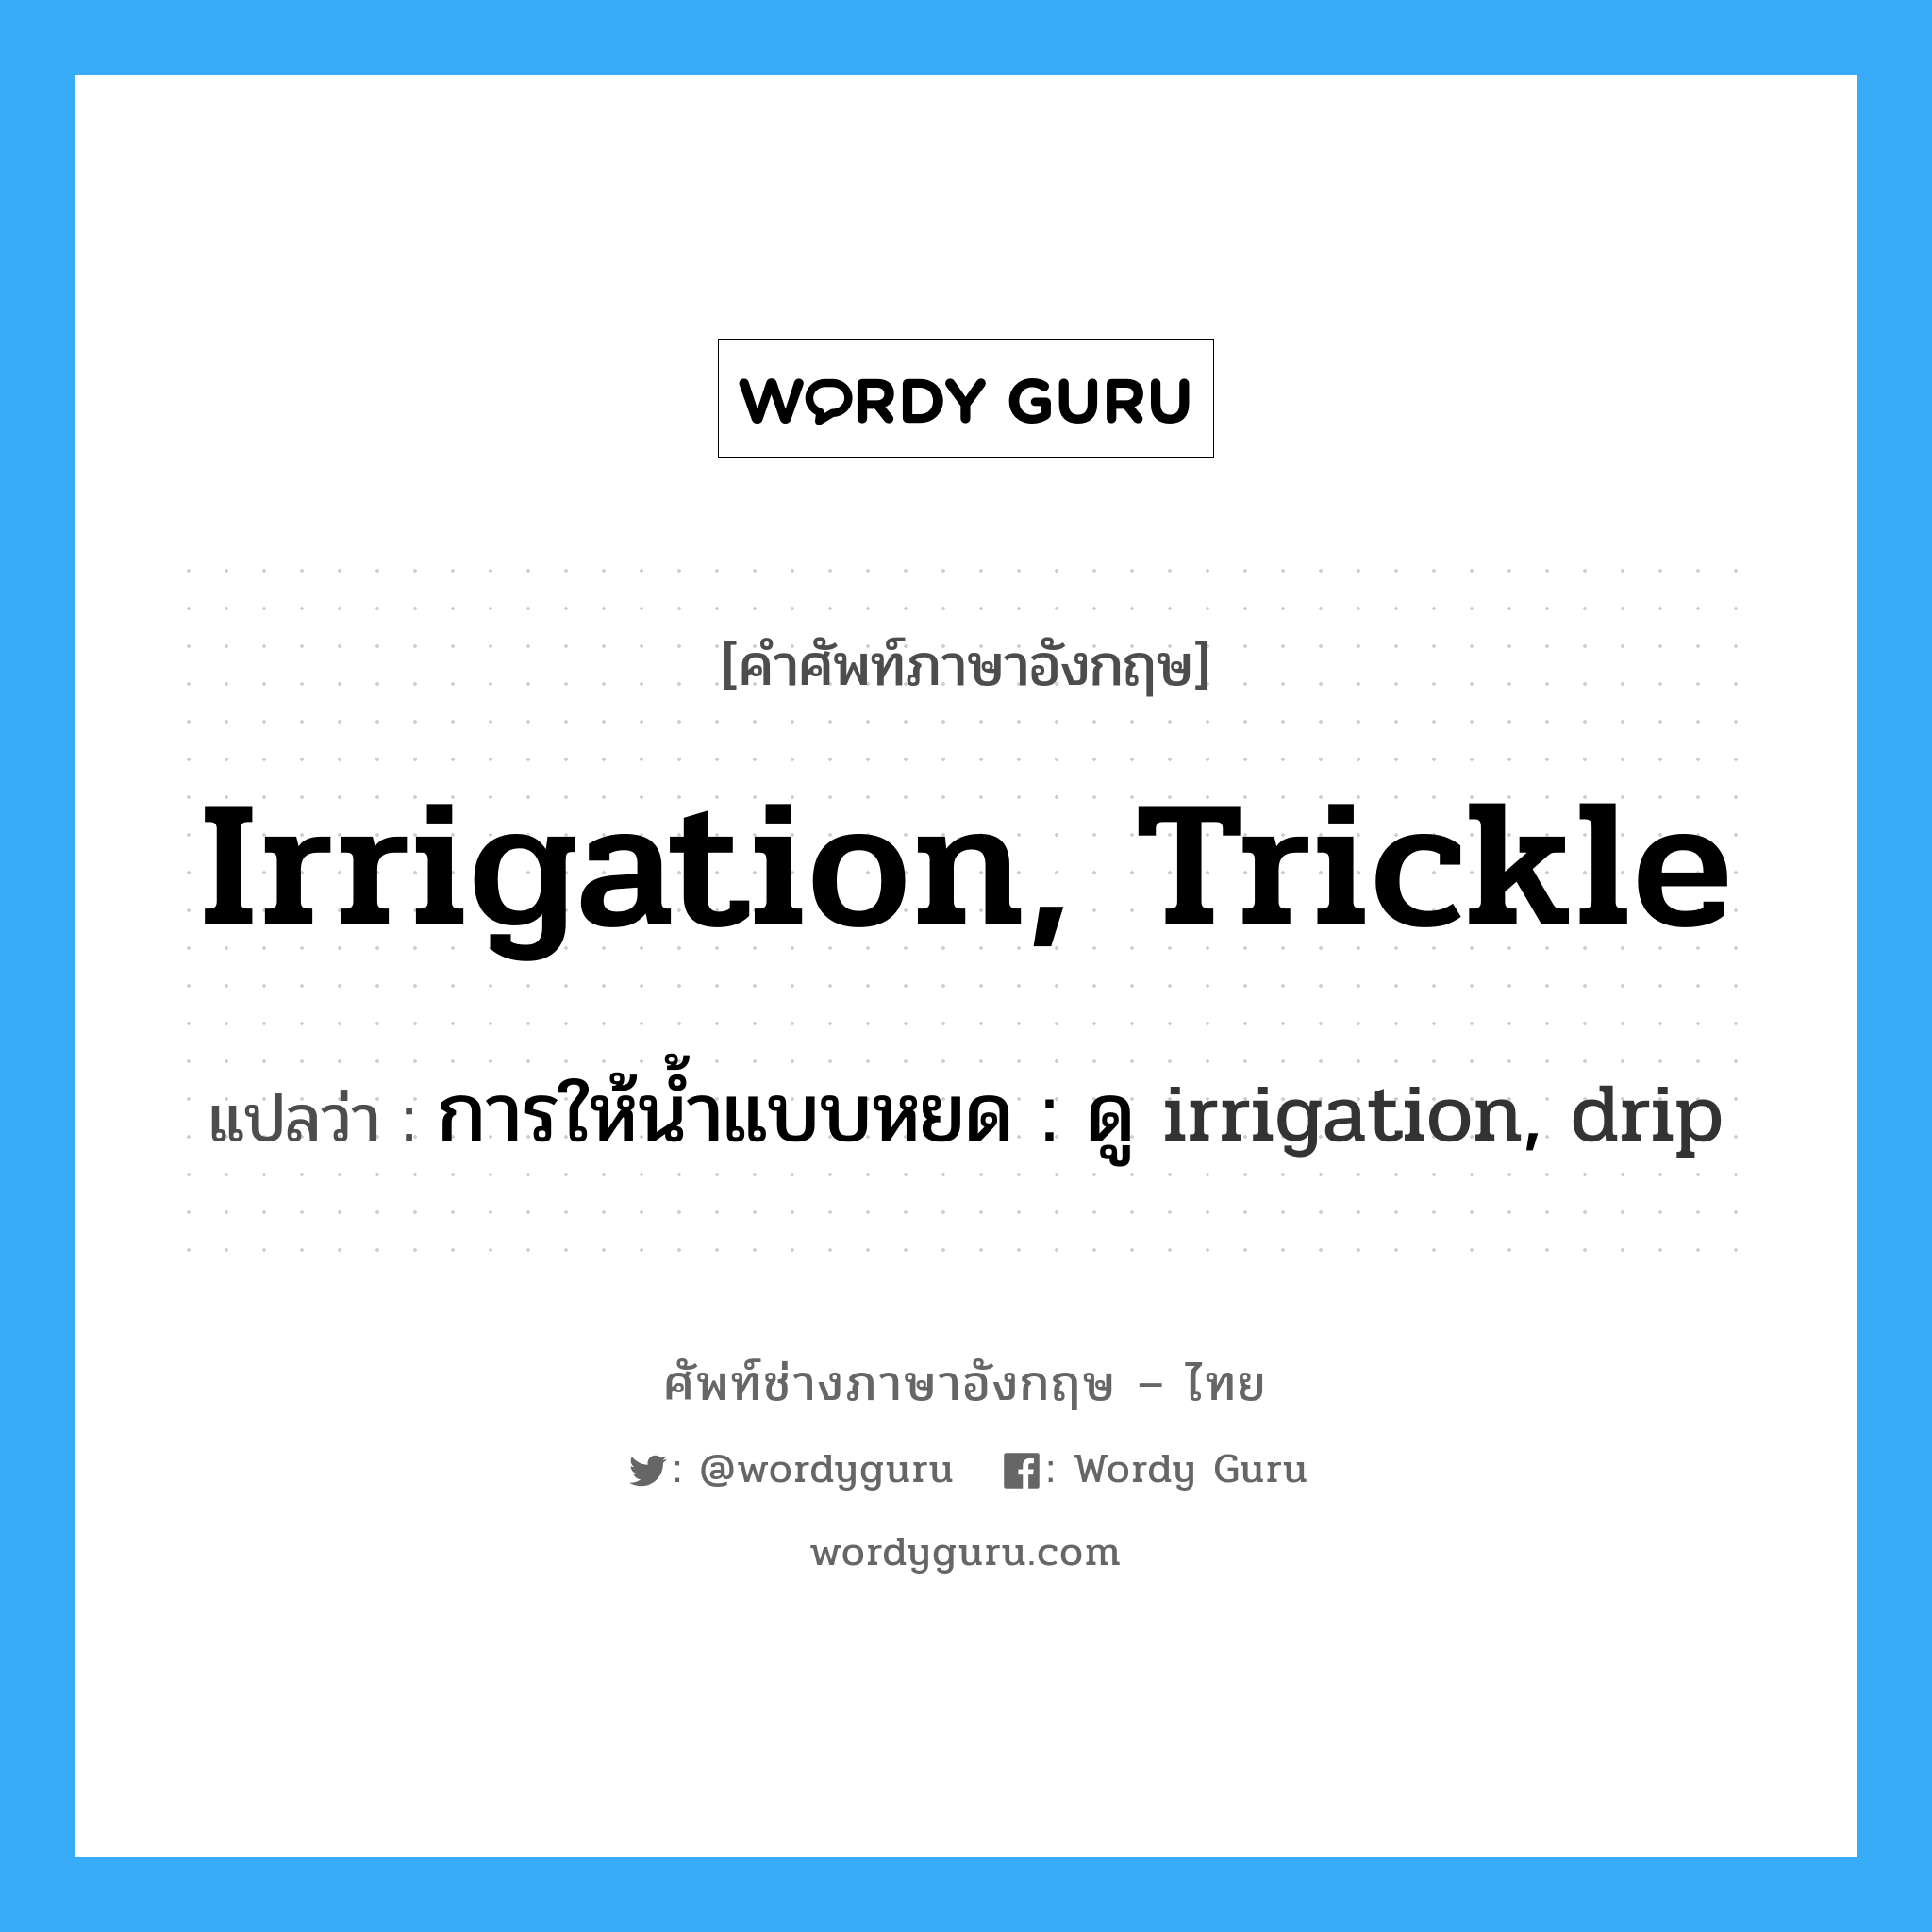 irrigation, trickle แปลว่า?, คำศัพท์ช่างภาษาอังกฤษ - ไทย irrigation, trickle คำศัพท์ภาษาอังกฤษ irrigation, trickle แปลว่า การให้น้ำแบบหยด : ดู irrigation, drip